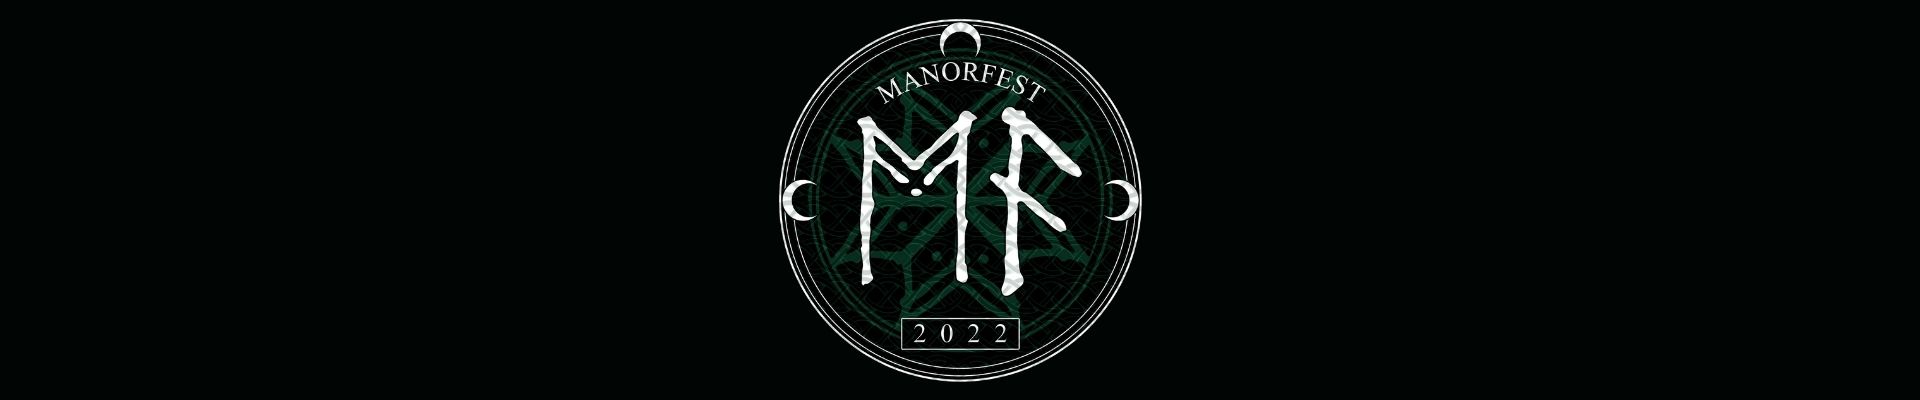 manorfest logo